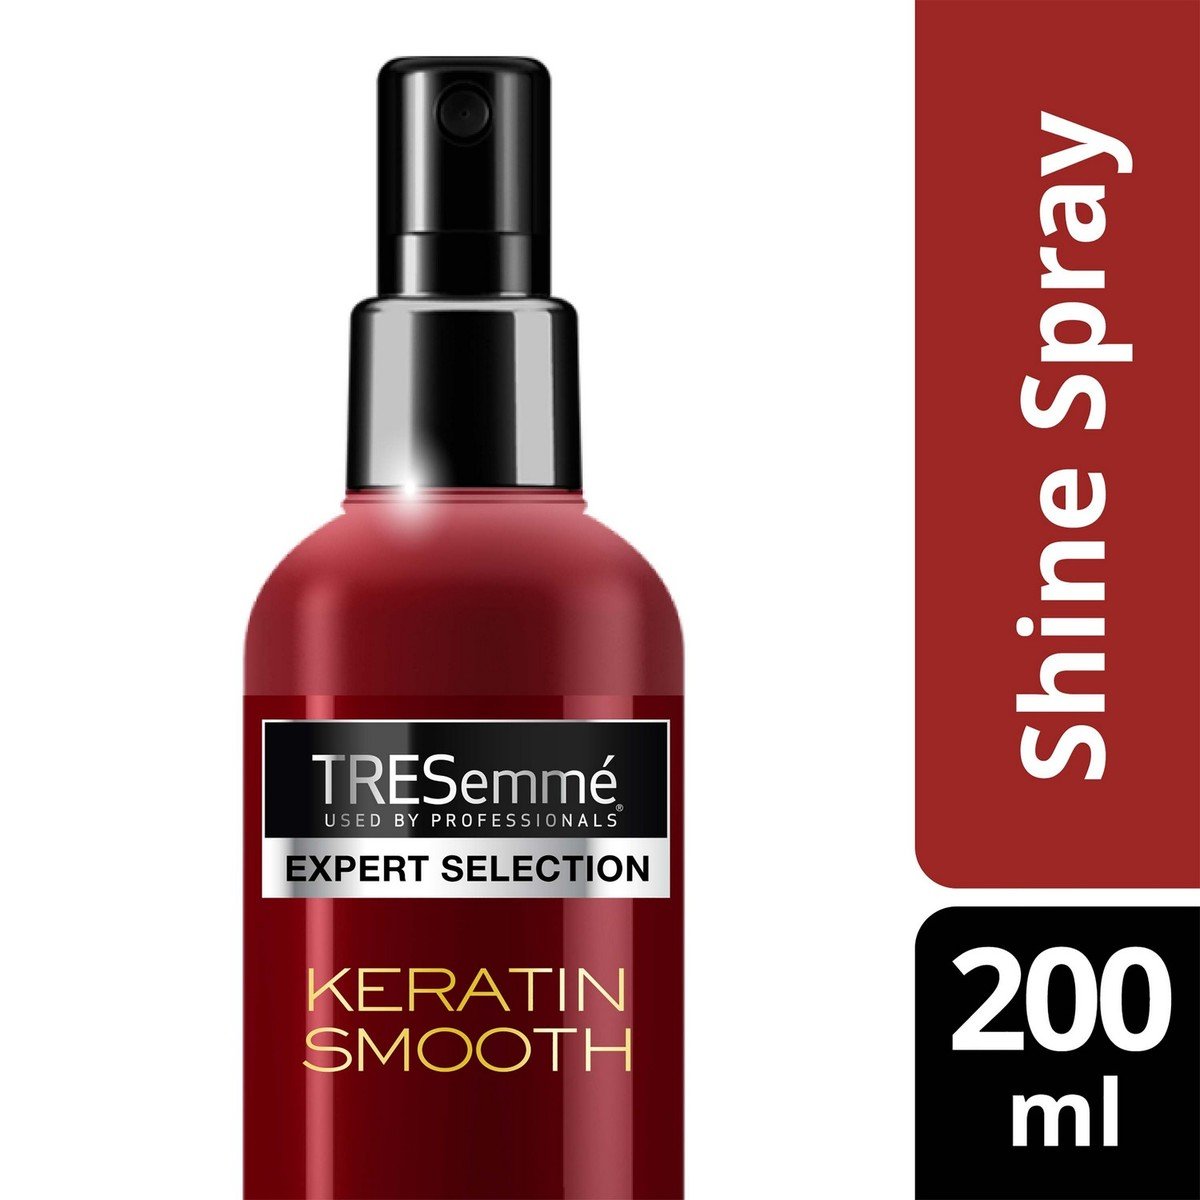 Tiresome Keratin Smooth Heat Protection Shine Spray 200 ml